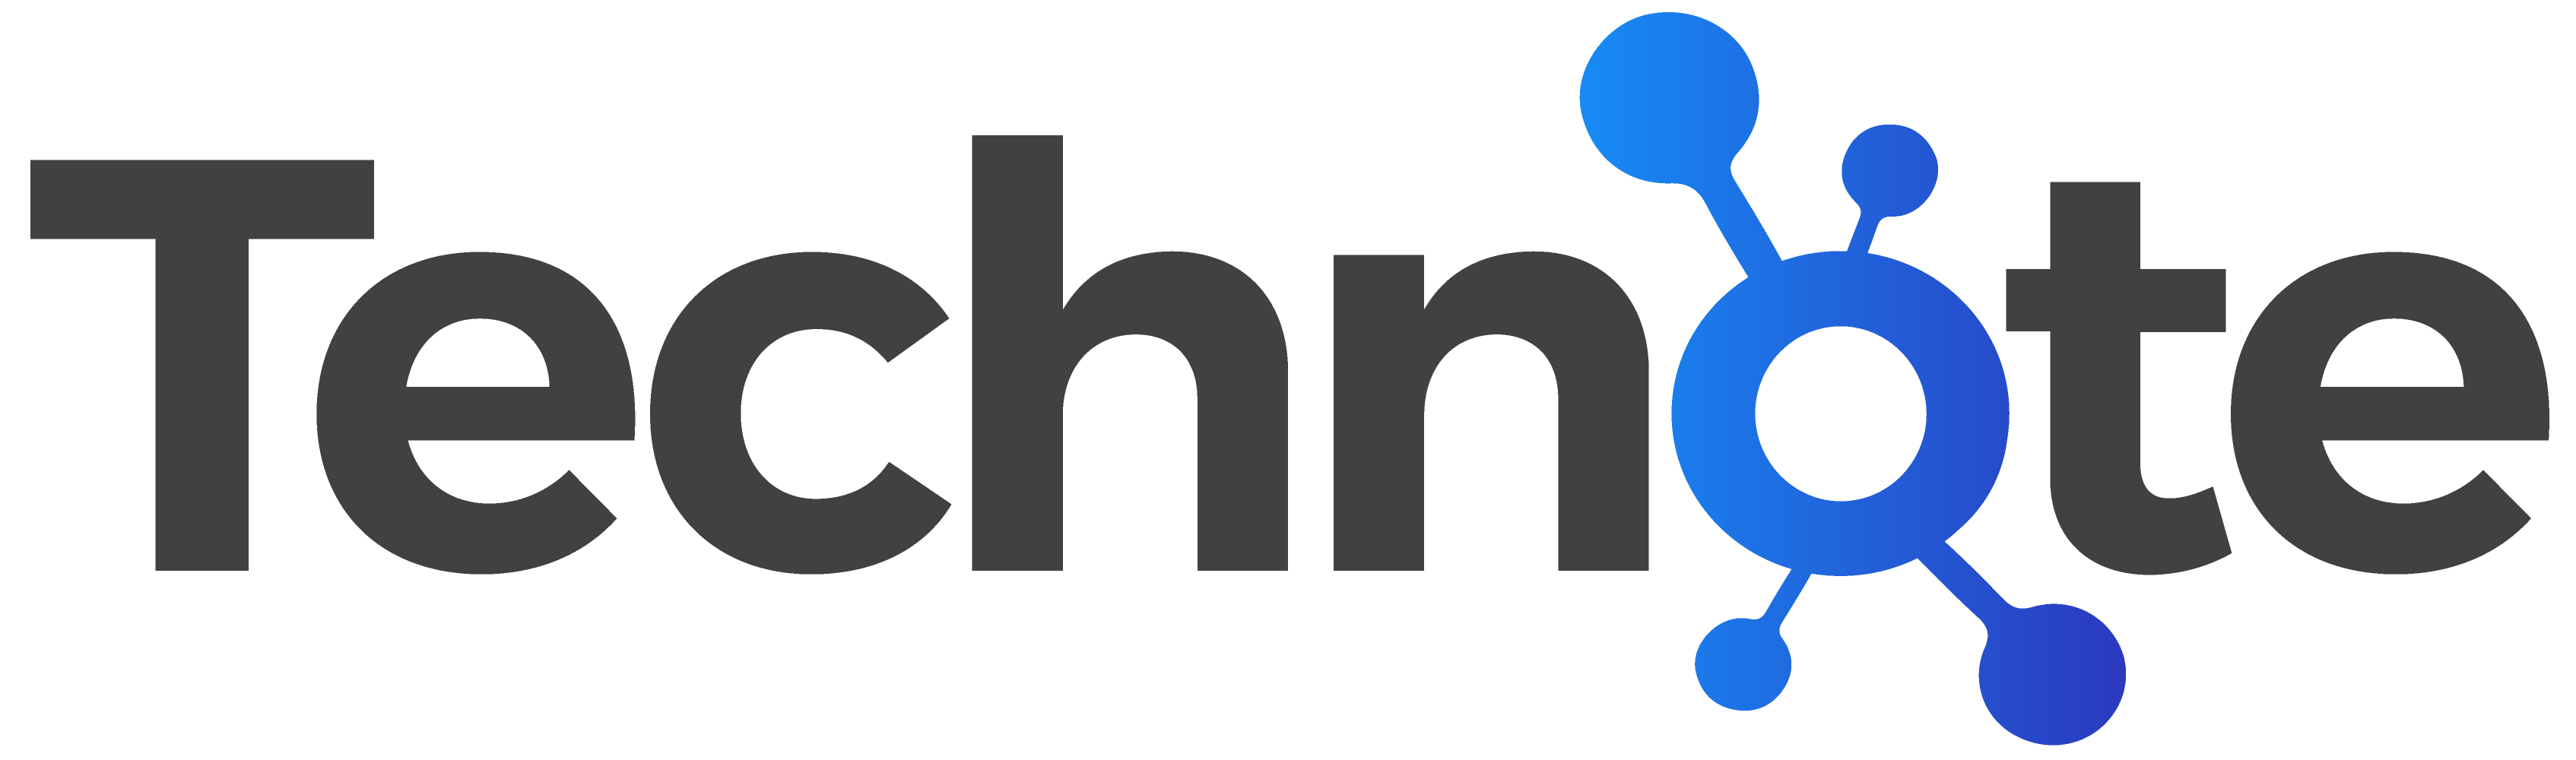 Technote logo